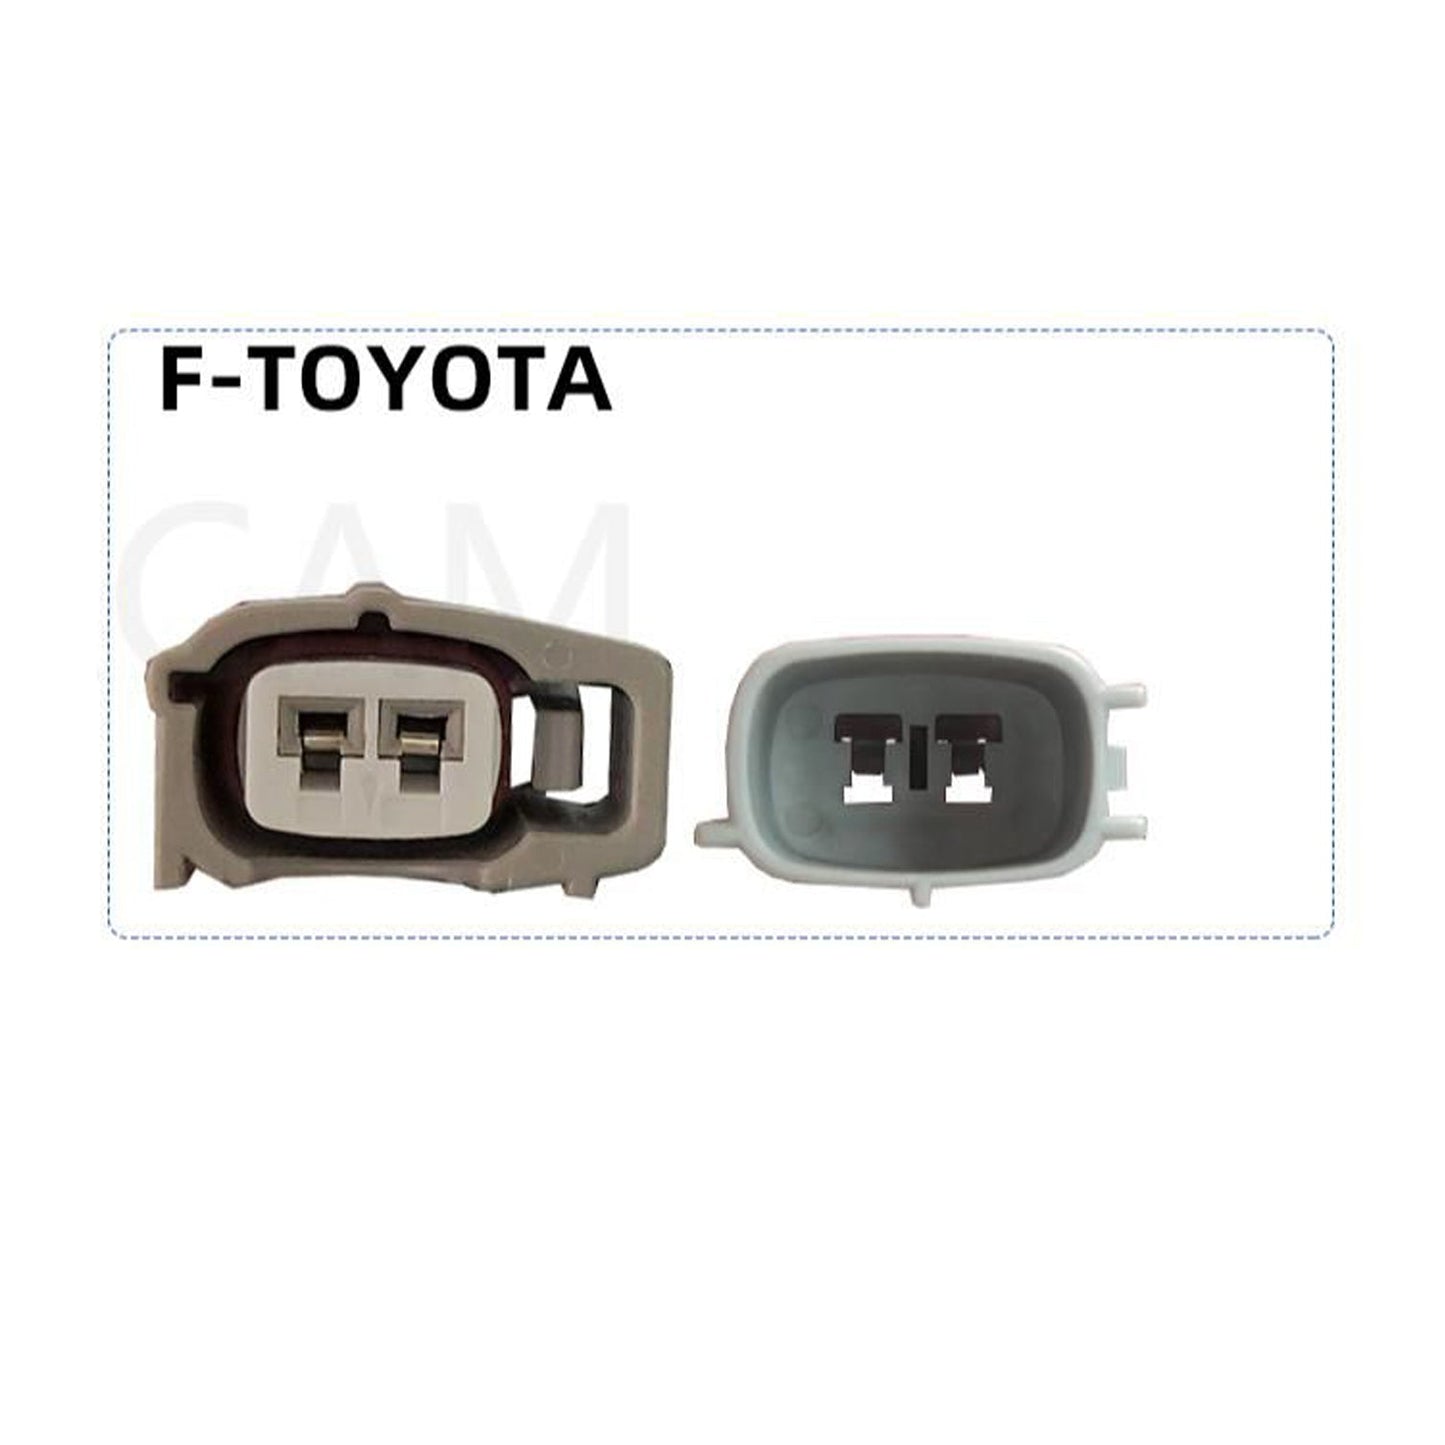 Umrüstsatz 8-Zylinder-Toyota-Umrüstsatz, Biomethanol-Konverter, Methanol-Alternative, Flex-Fuel-Assistent. 